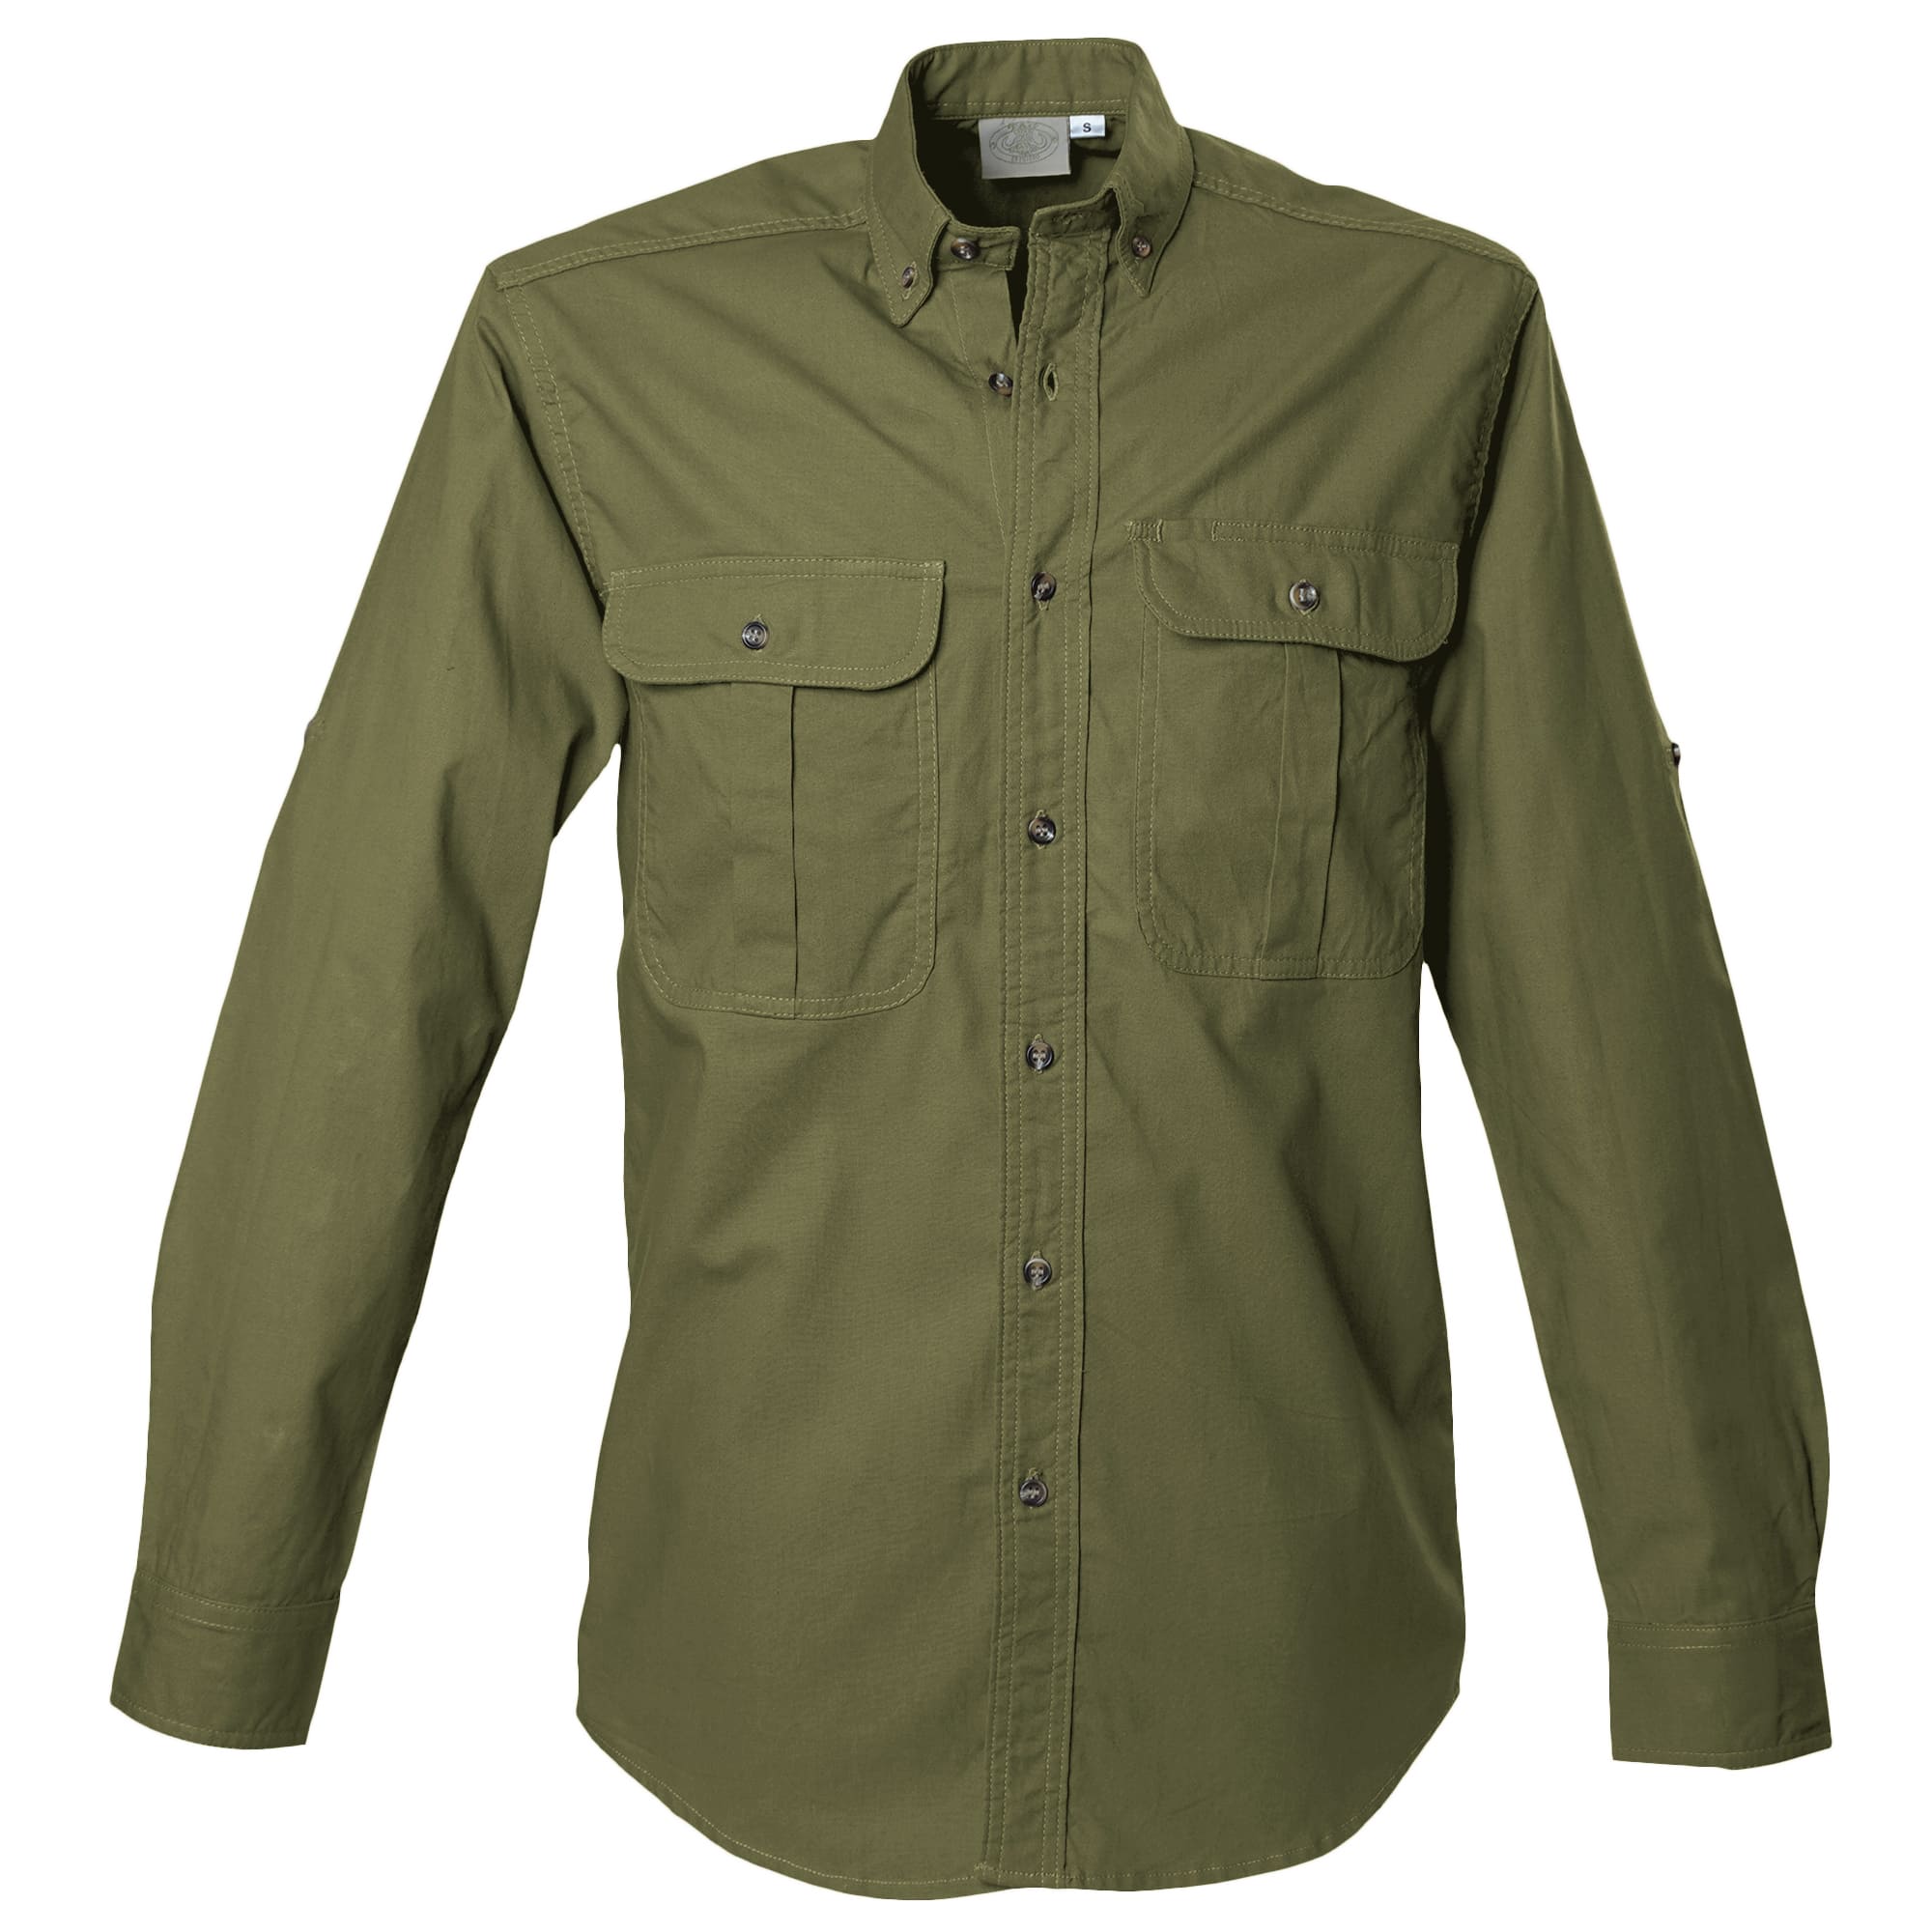 Tag Safari Men's Safari Long Sleeve Shirt W Chest Pockets (Olive, Small)